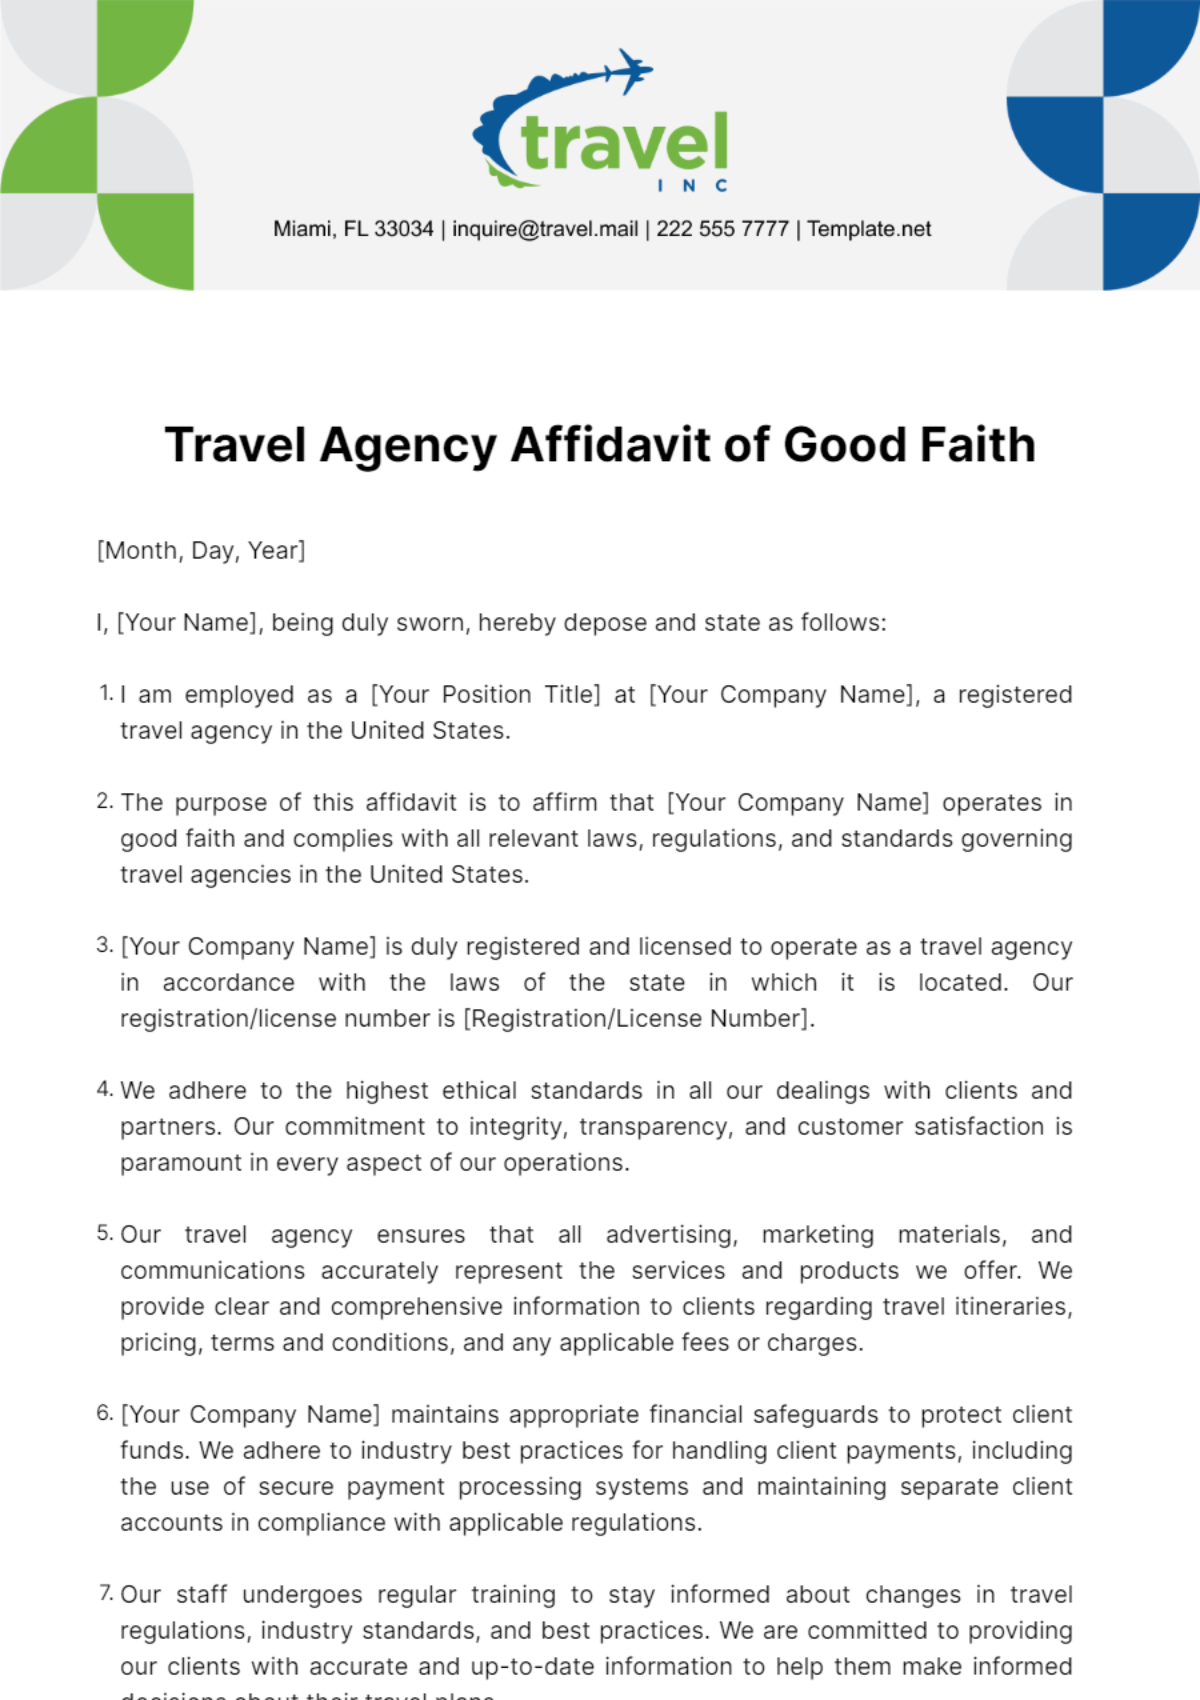 Travel Agency Affidavit of Good Faith Template